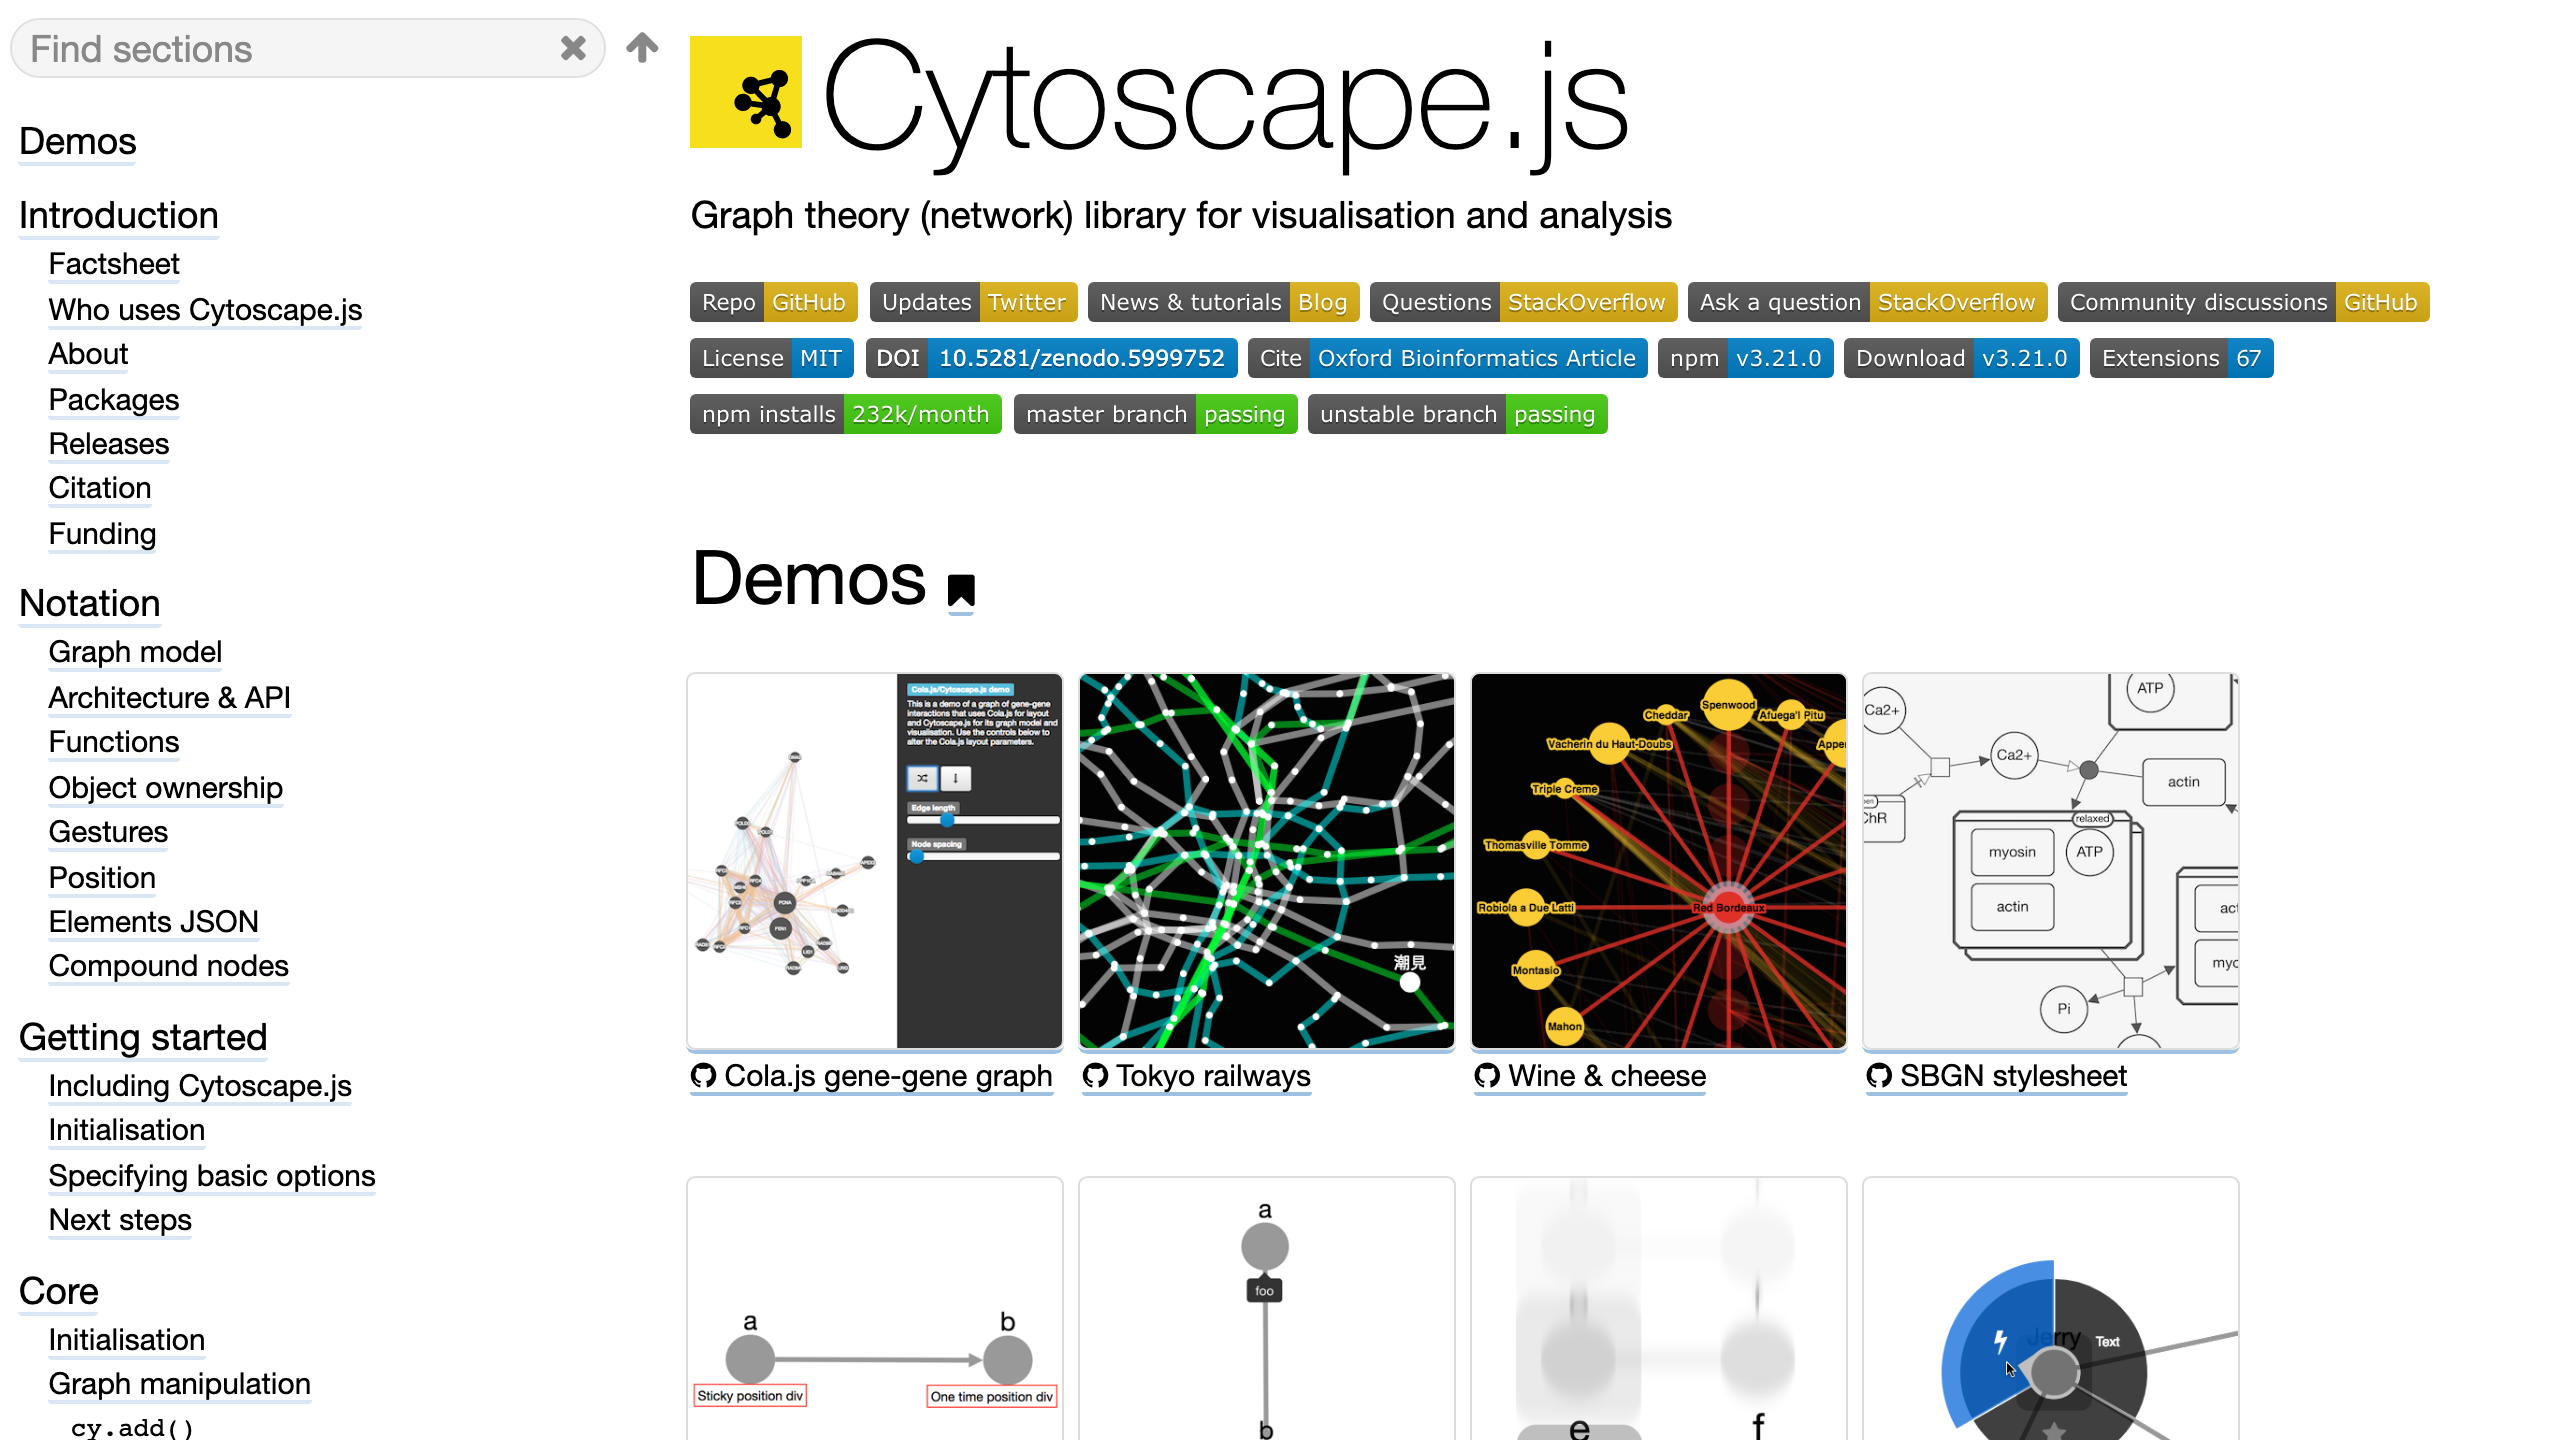 Cytoscape.js's website screenshot